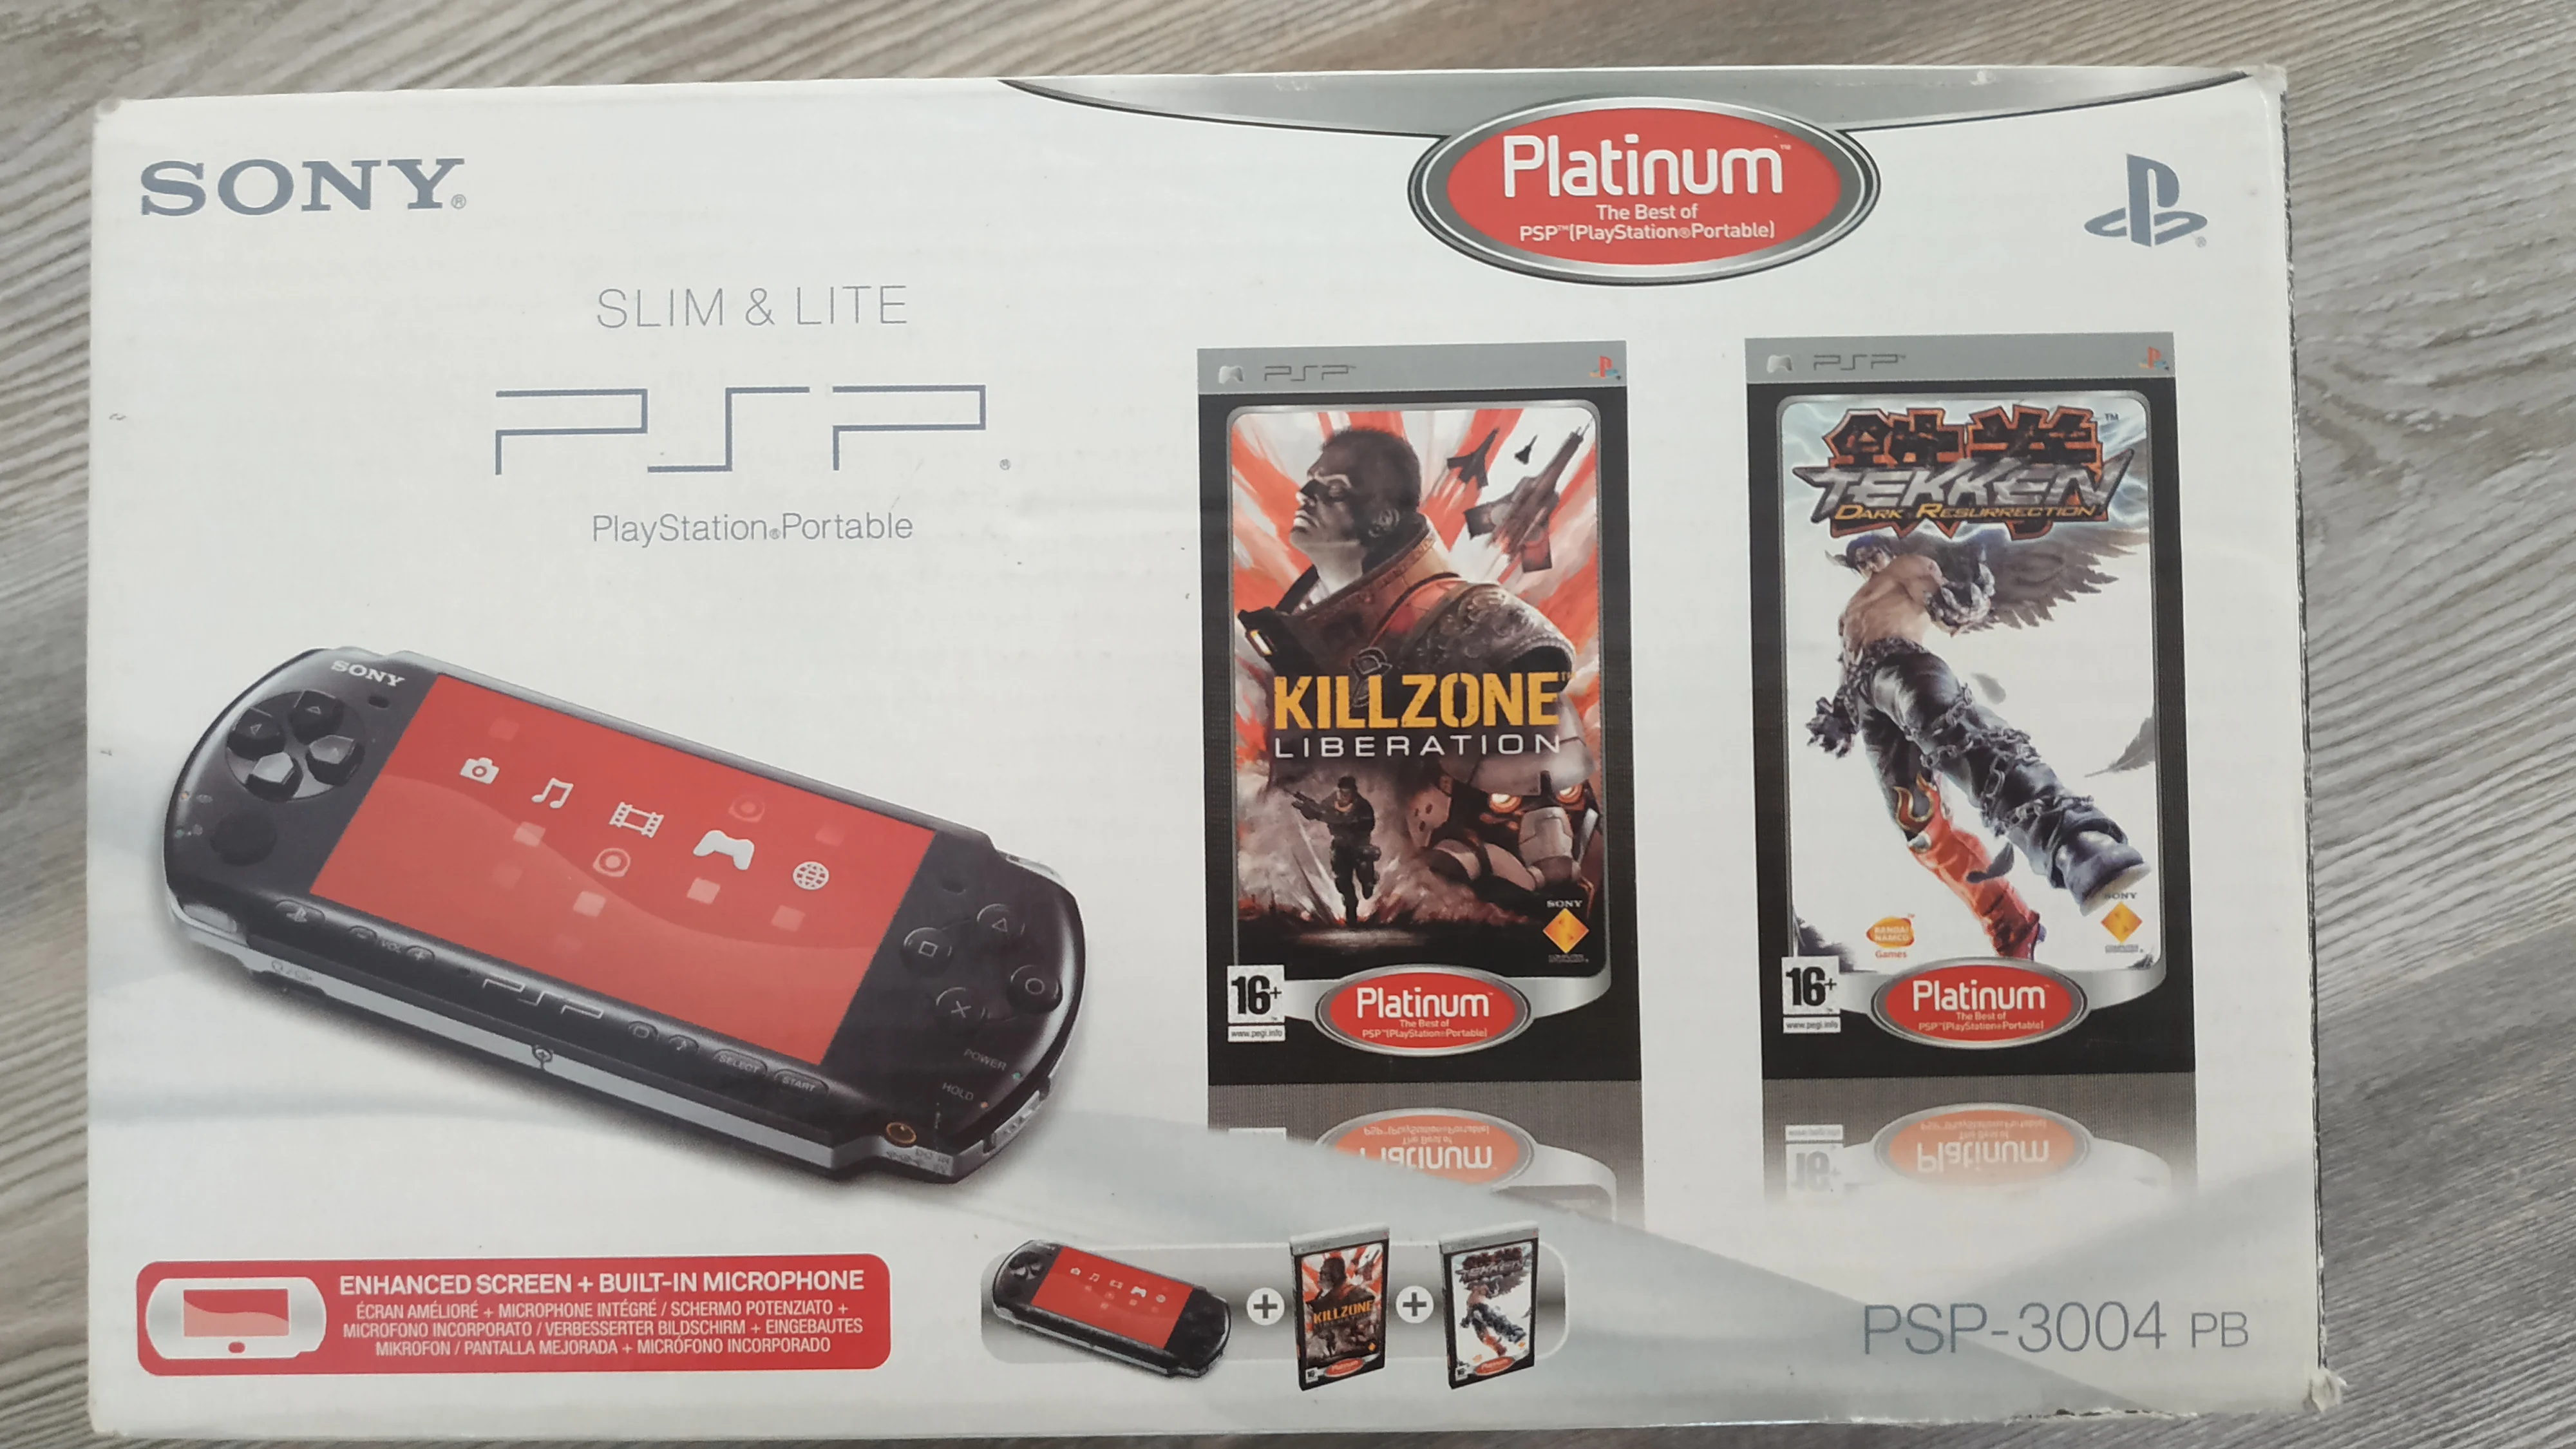  Sony PSP 3000 Killzone and Tekken Platinum Bundle